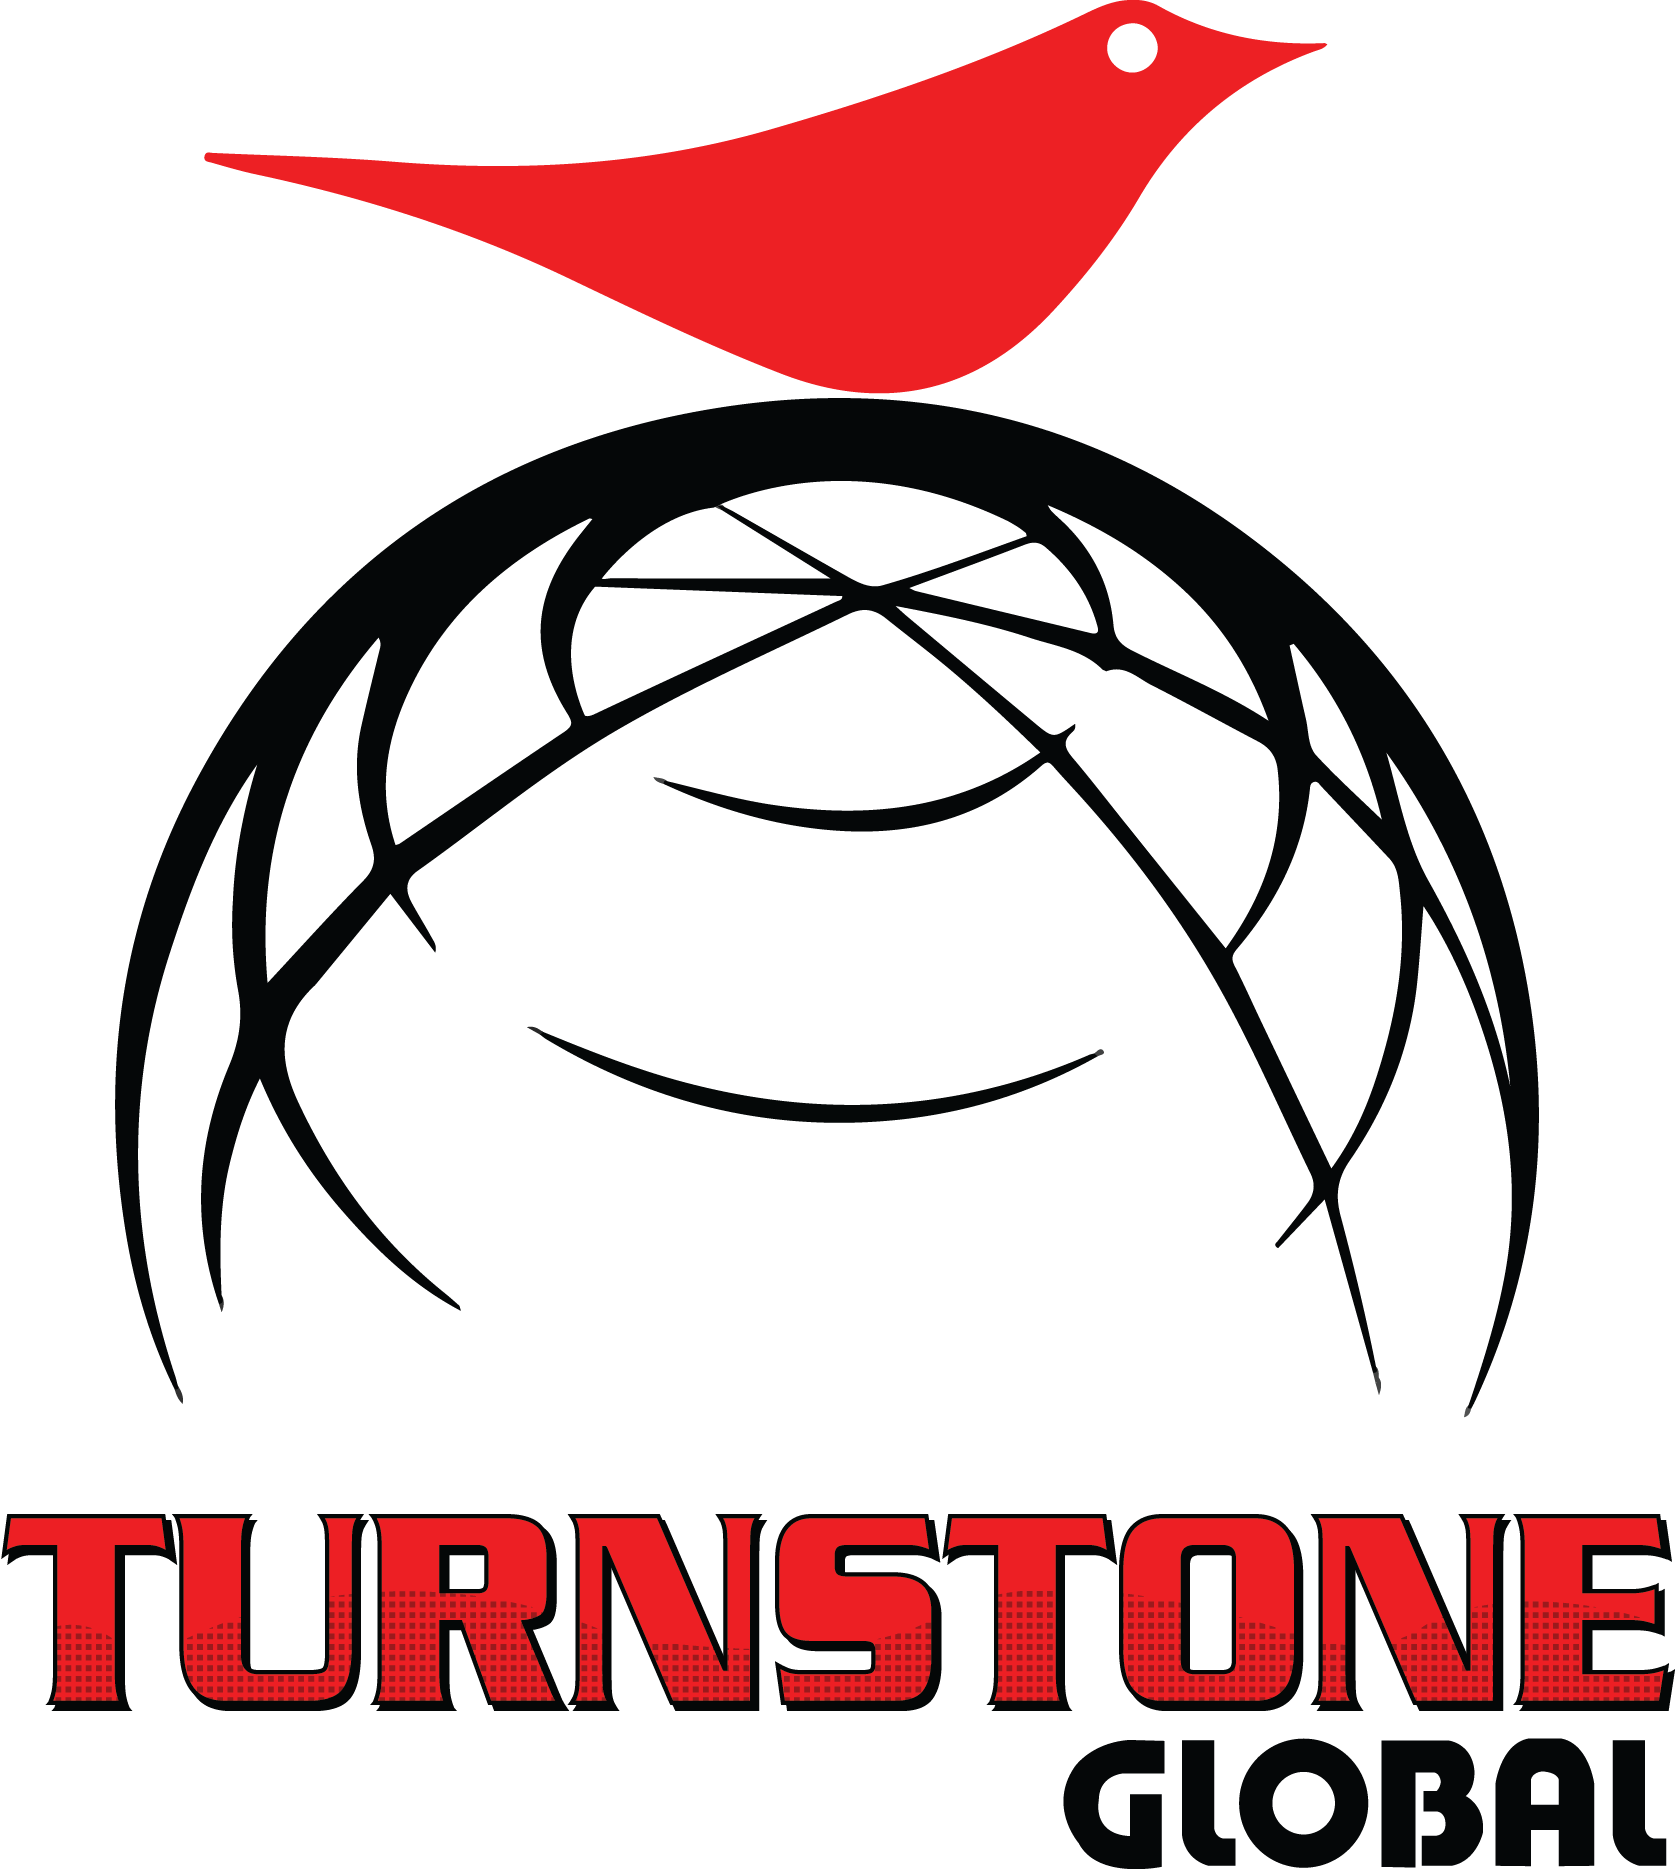 Turnstone Global